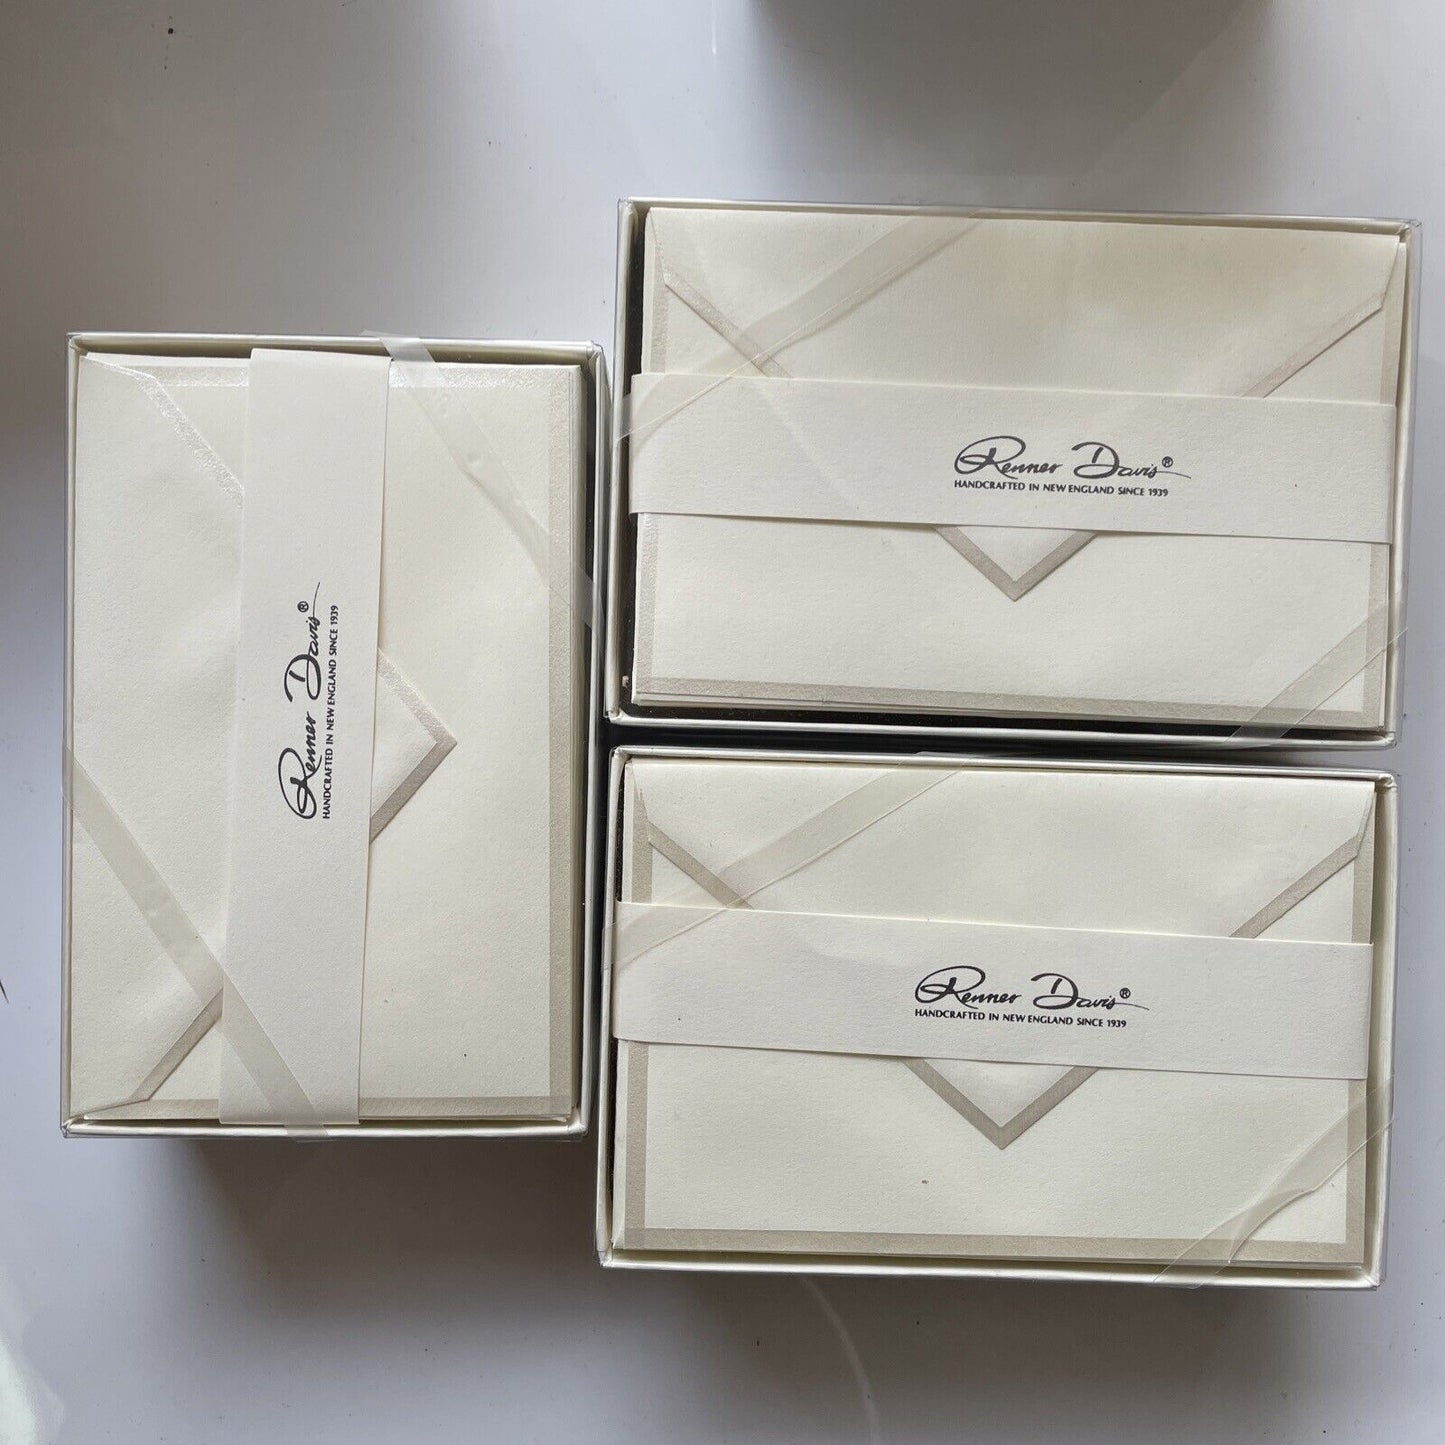 Lot Of 3 RENNER DAVIS Stationary 20 Handcrafted Cards & Envelopes 5-1/2x3-1/2”